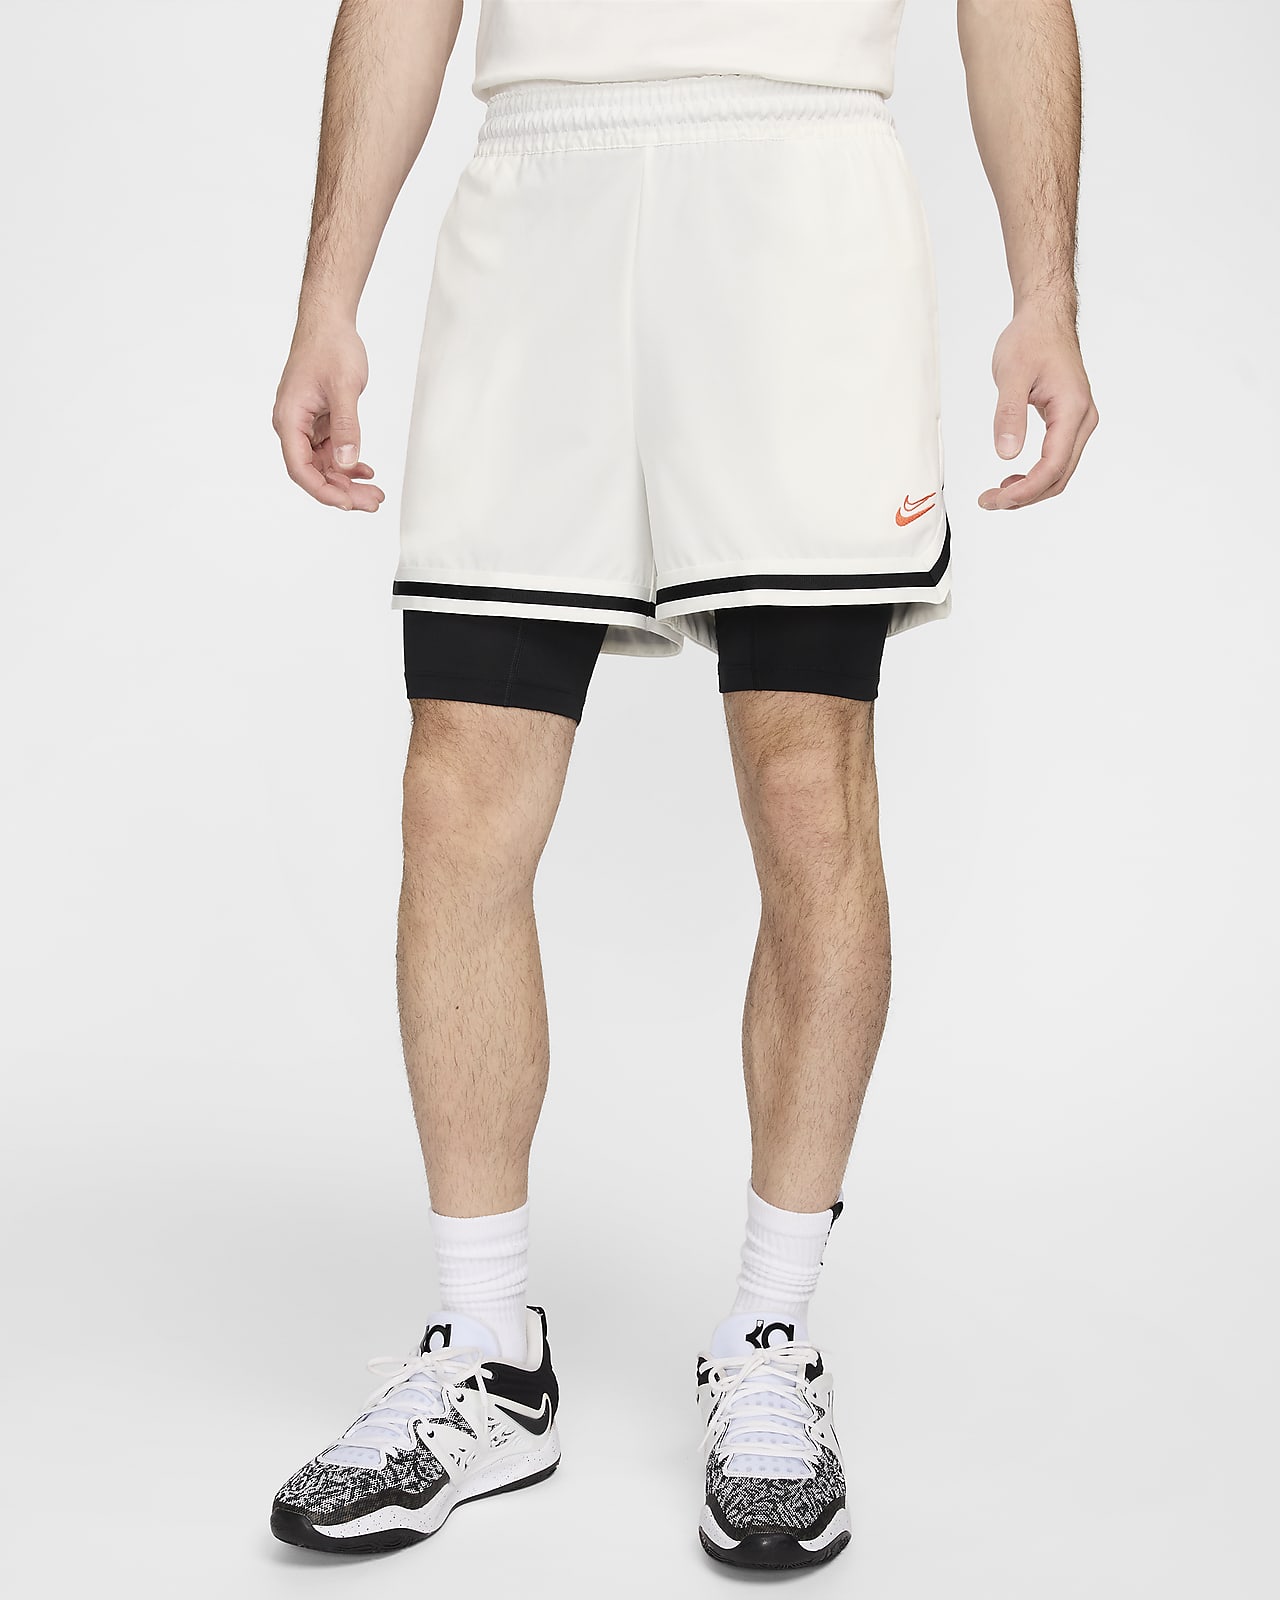 Kevin Durant Men's 4" DNA 2-in-1 Basketball Shorts